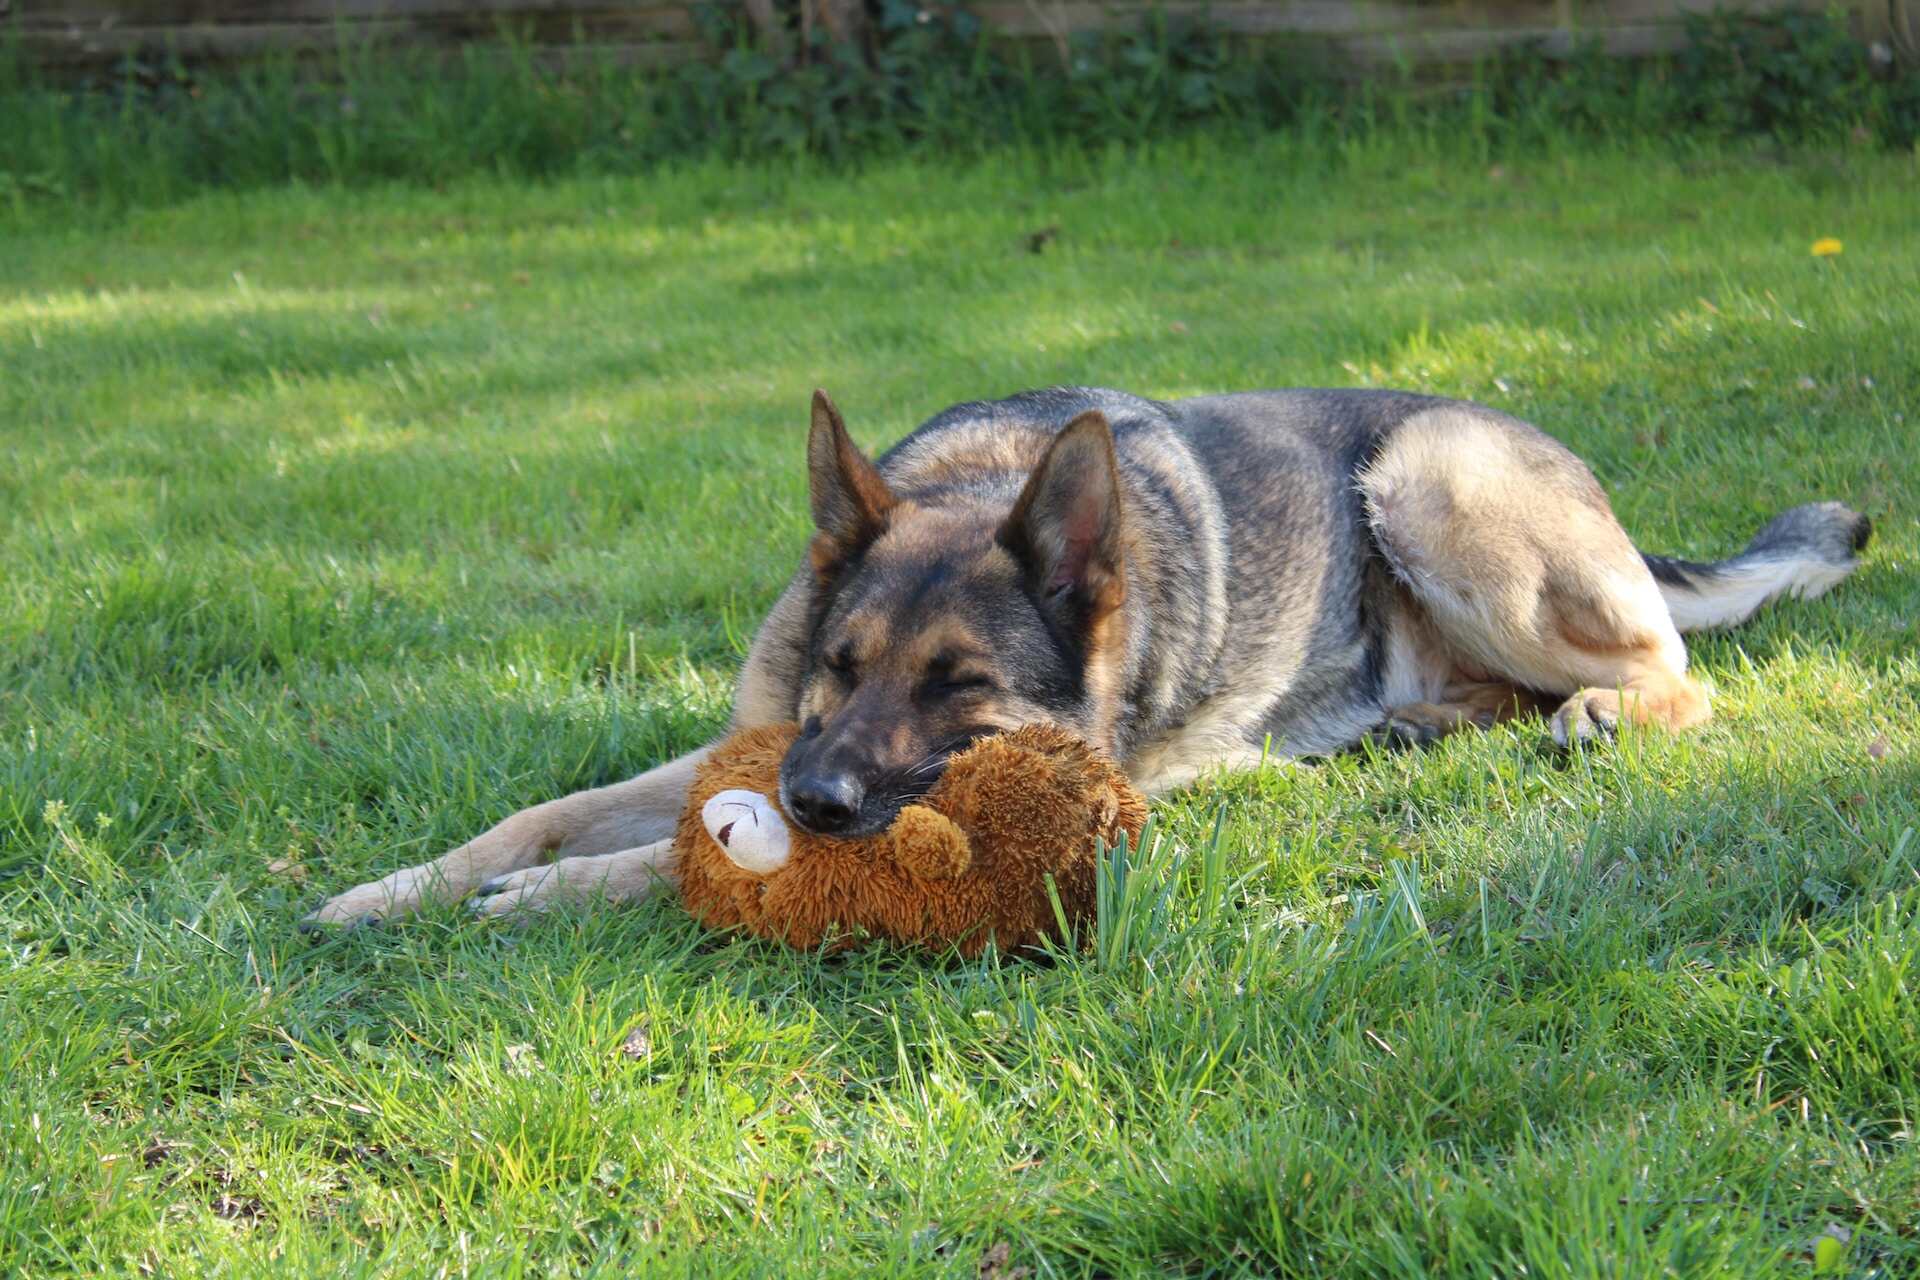 A German Shepherd sleeping in a lawn with a stuffed toy